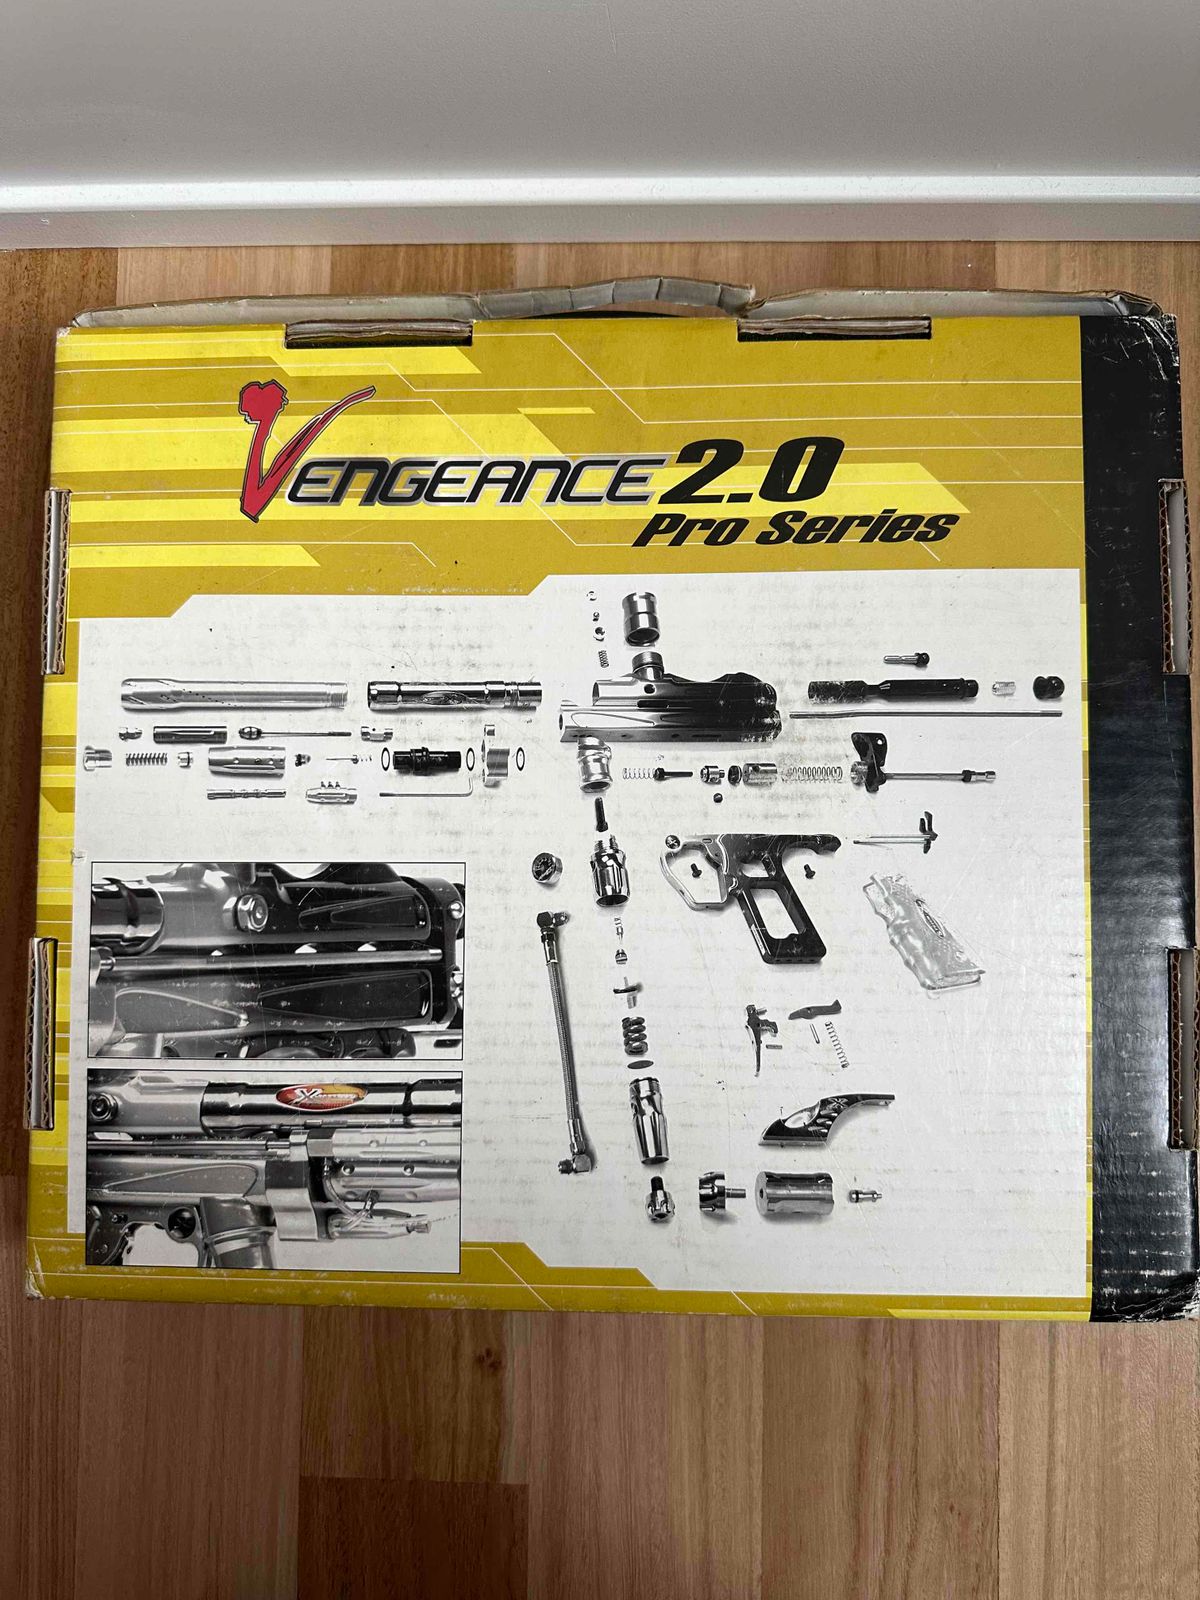 System X Vengeance 2.0 Xonik autococker